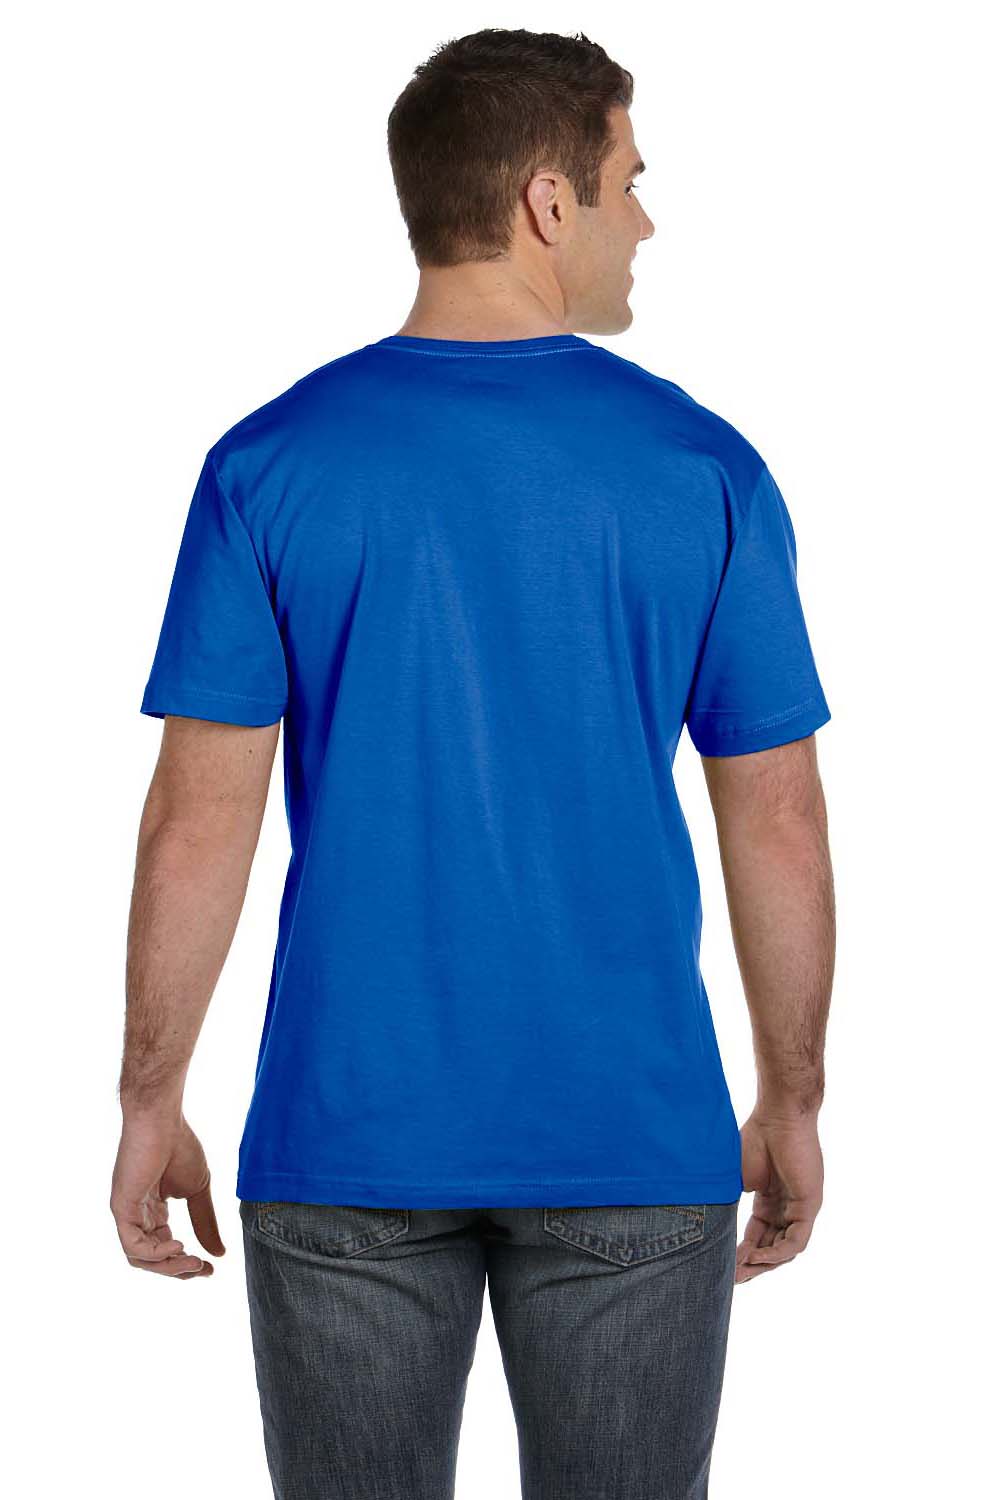 LAT 6901 Mens Fine Jersey Short Sleeve Crewneck T-Shirt Royal Blue Back